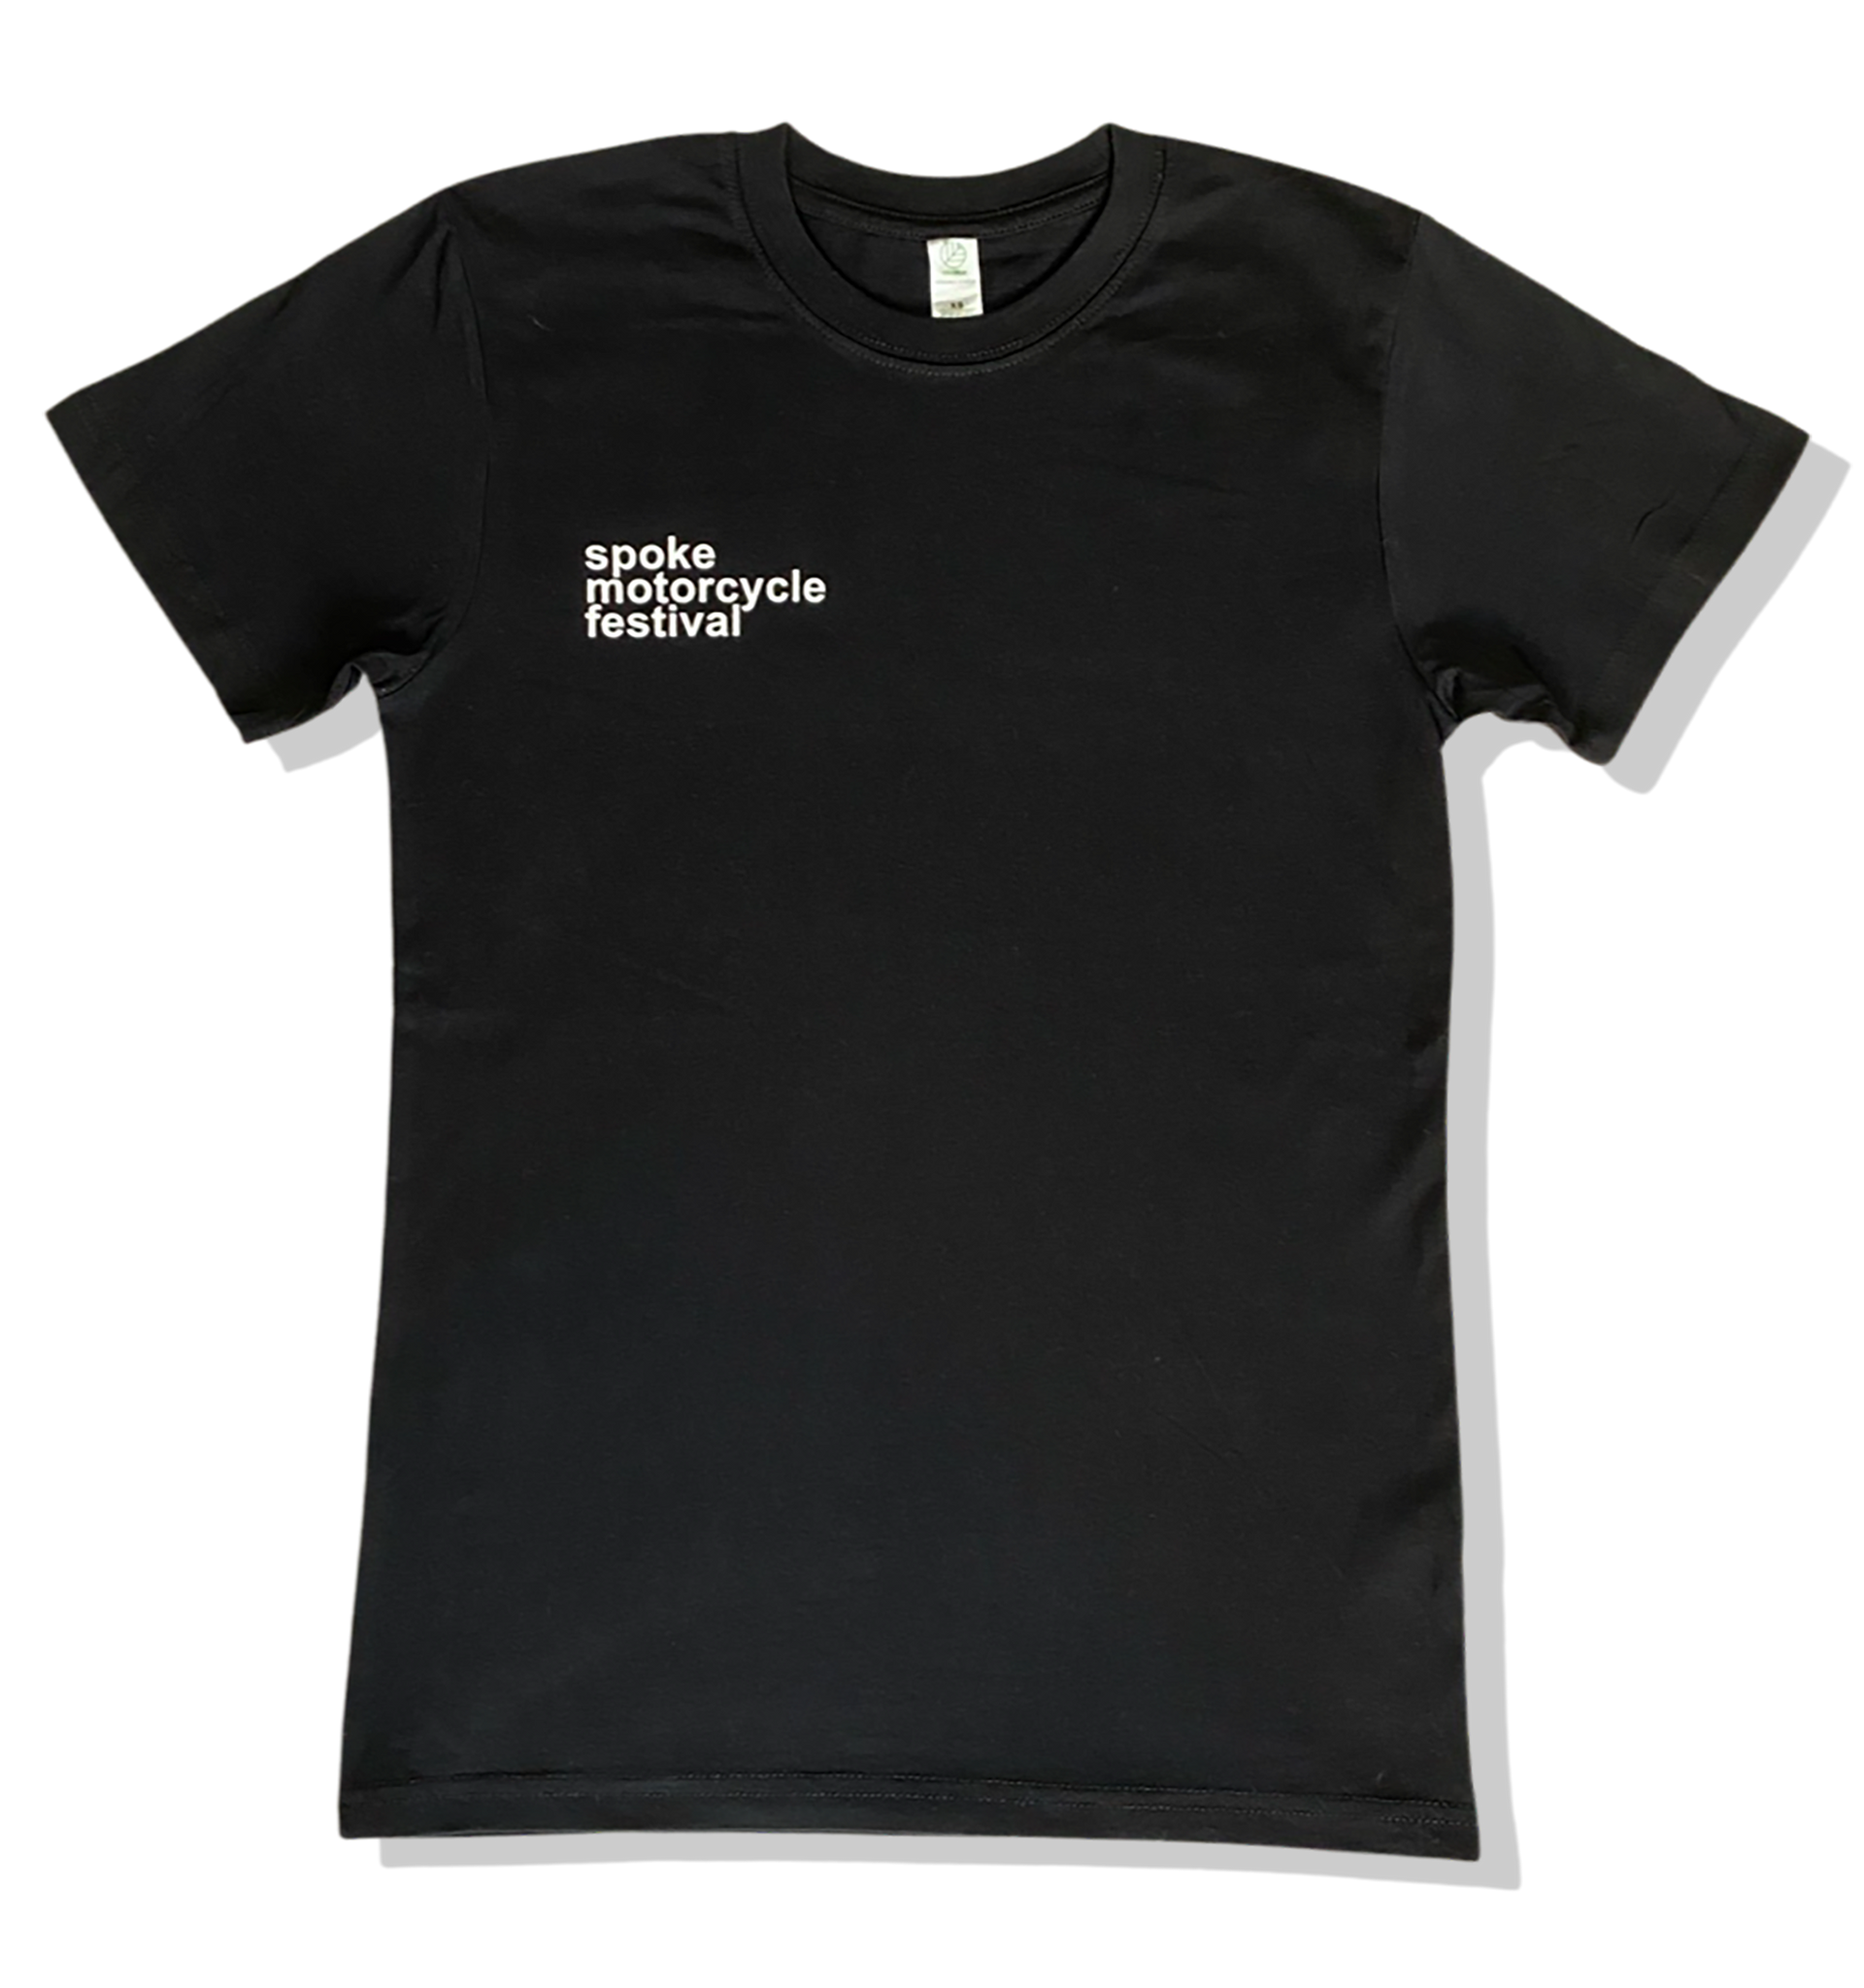 Spoke Motorcycle Festival Black T-Shirt - Spoke Text